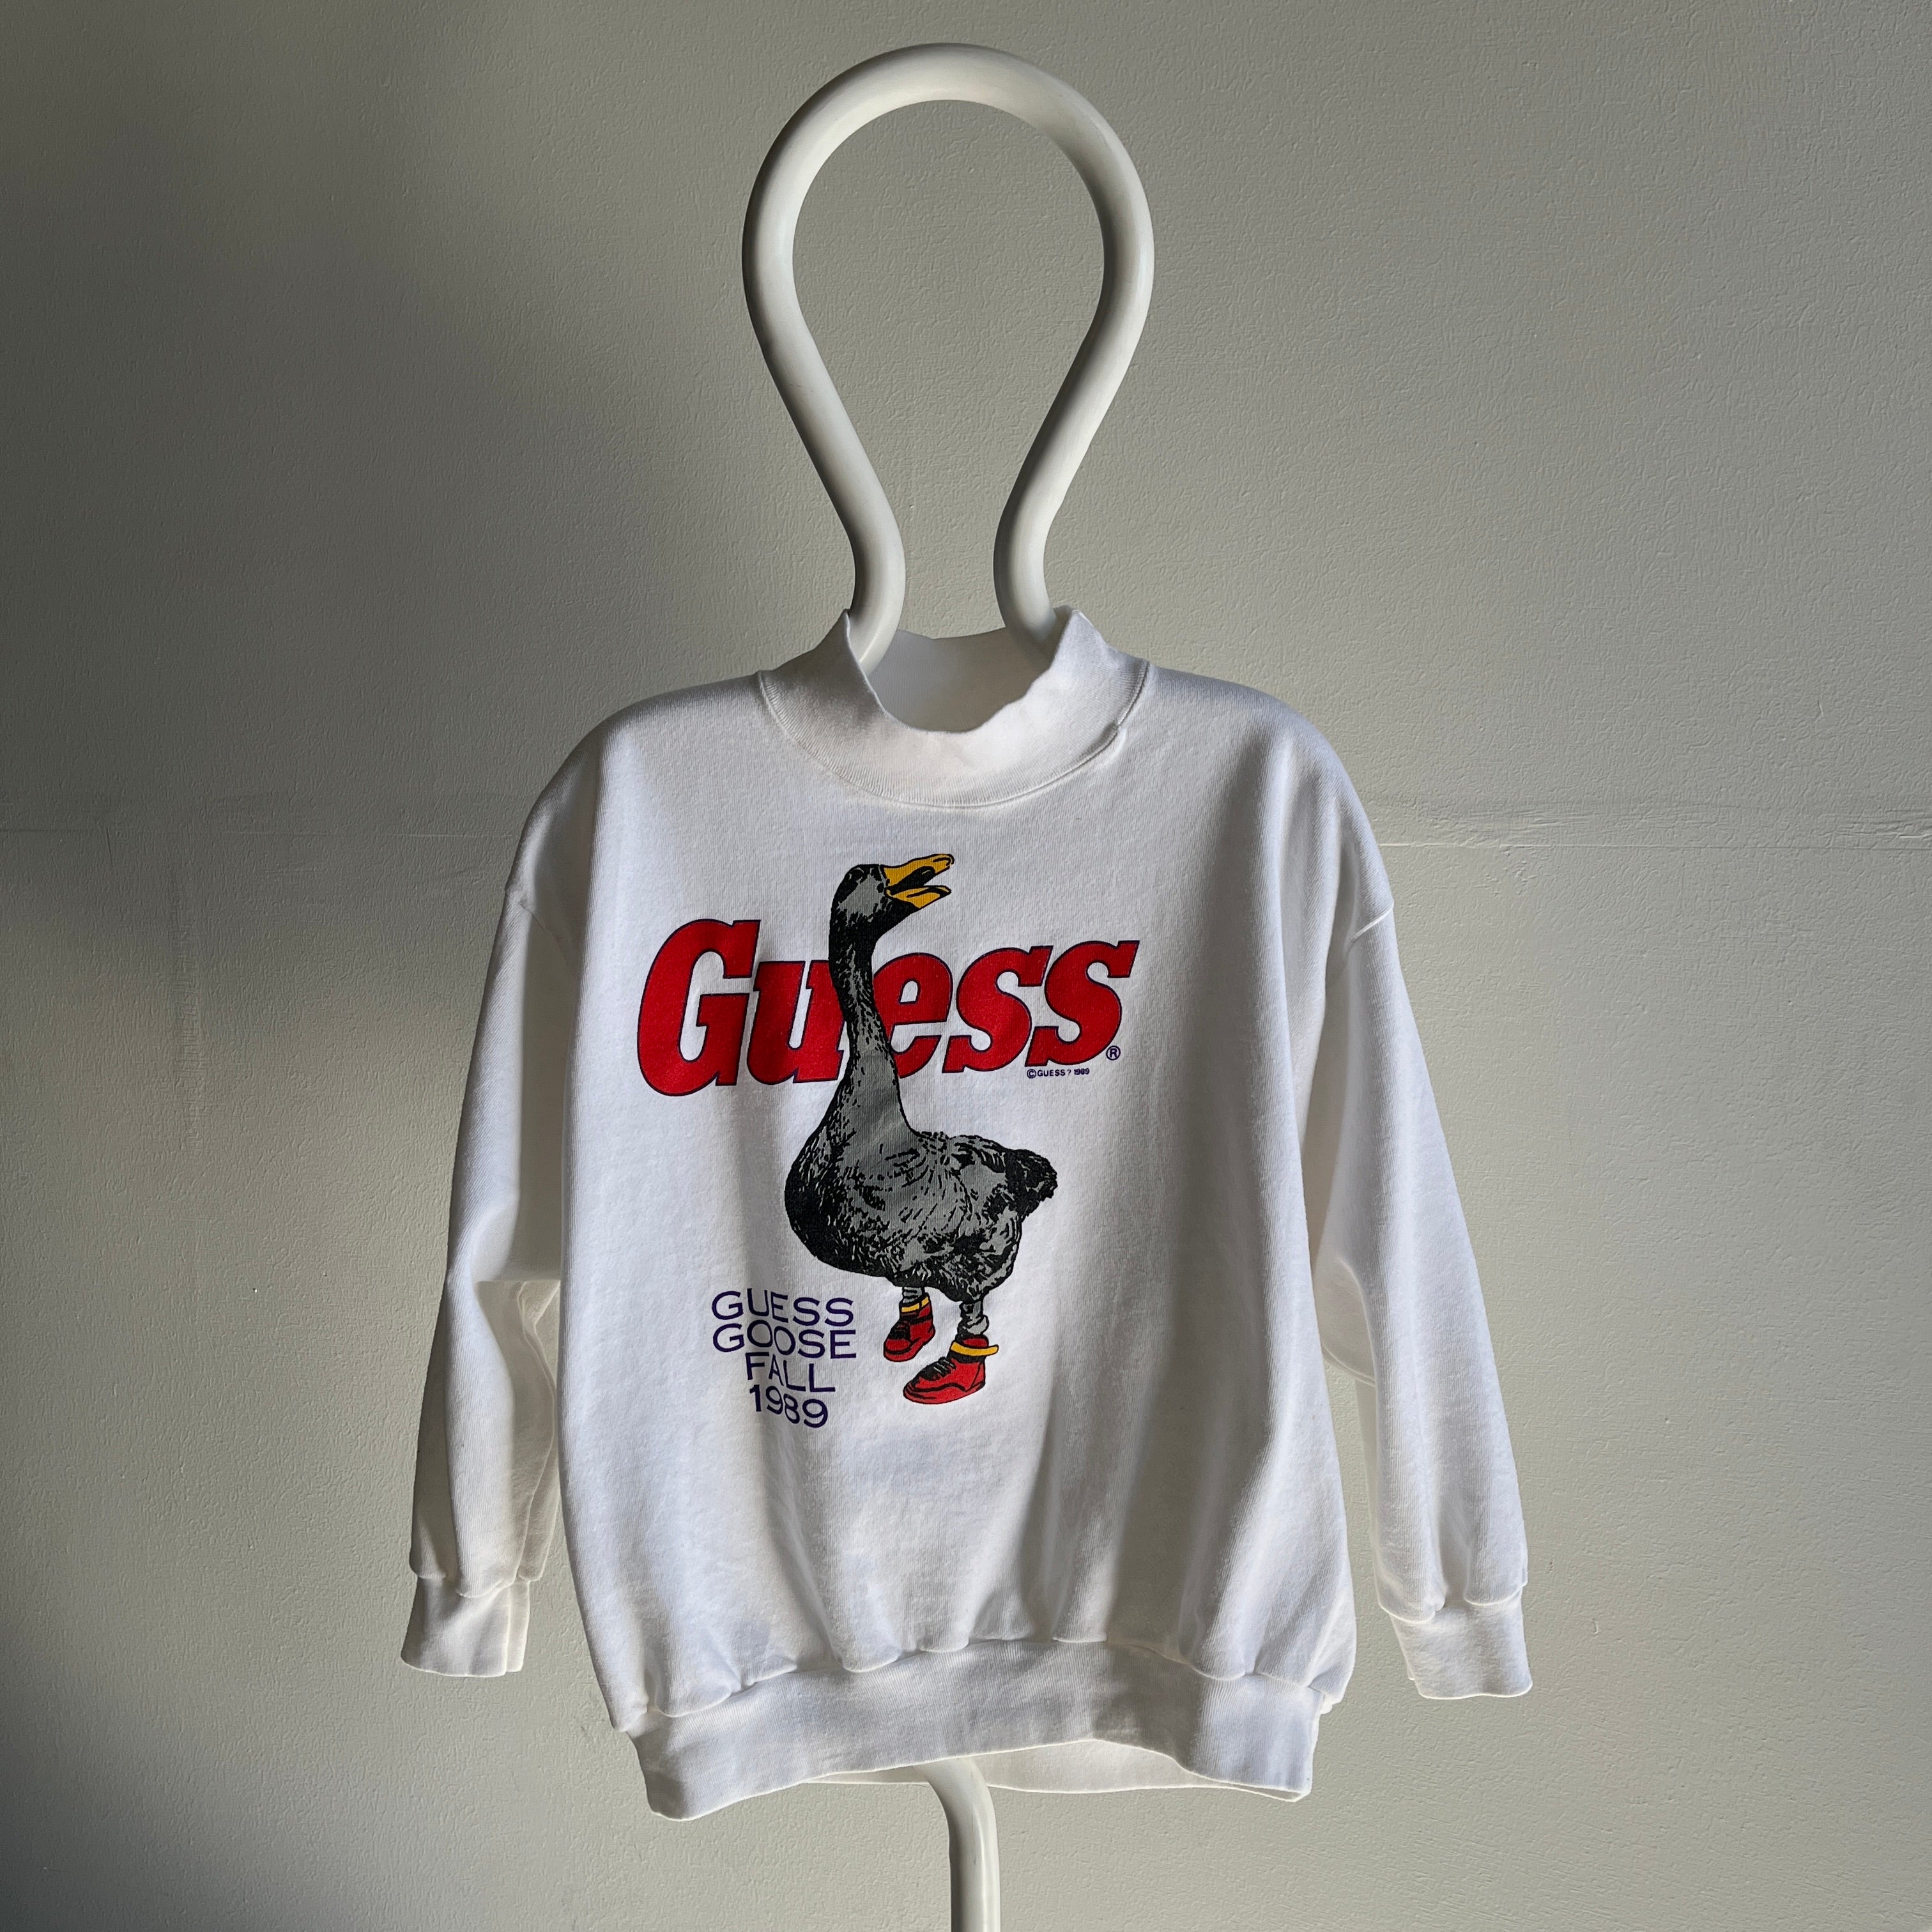 1989 Guess Jeans Goose In High Tops Mock Neck Sweatshirt